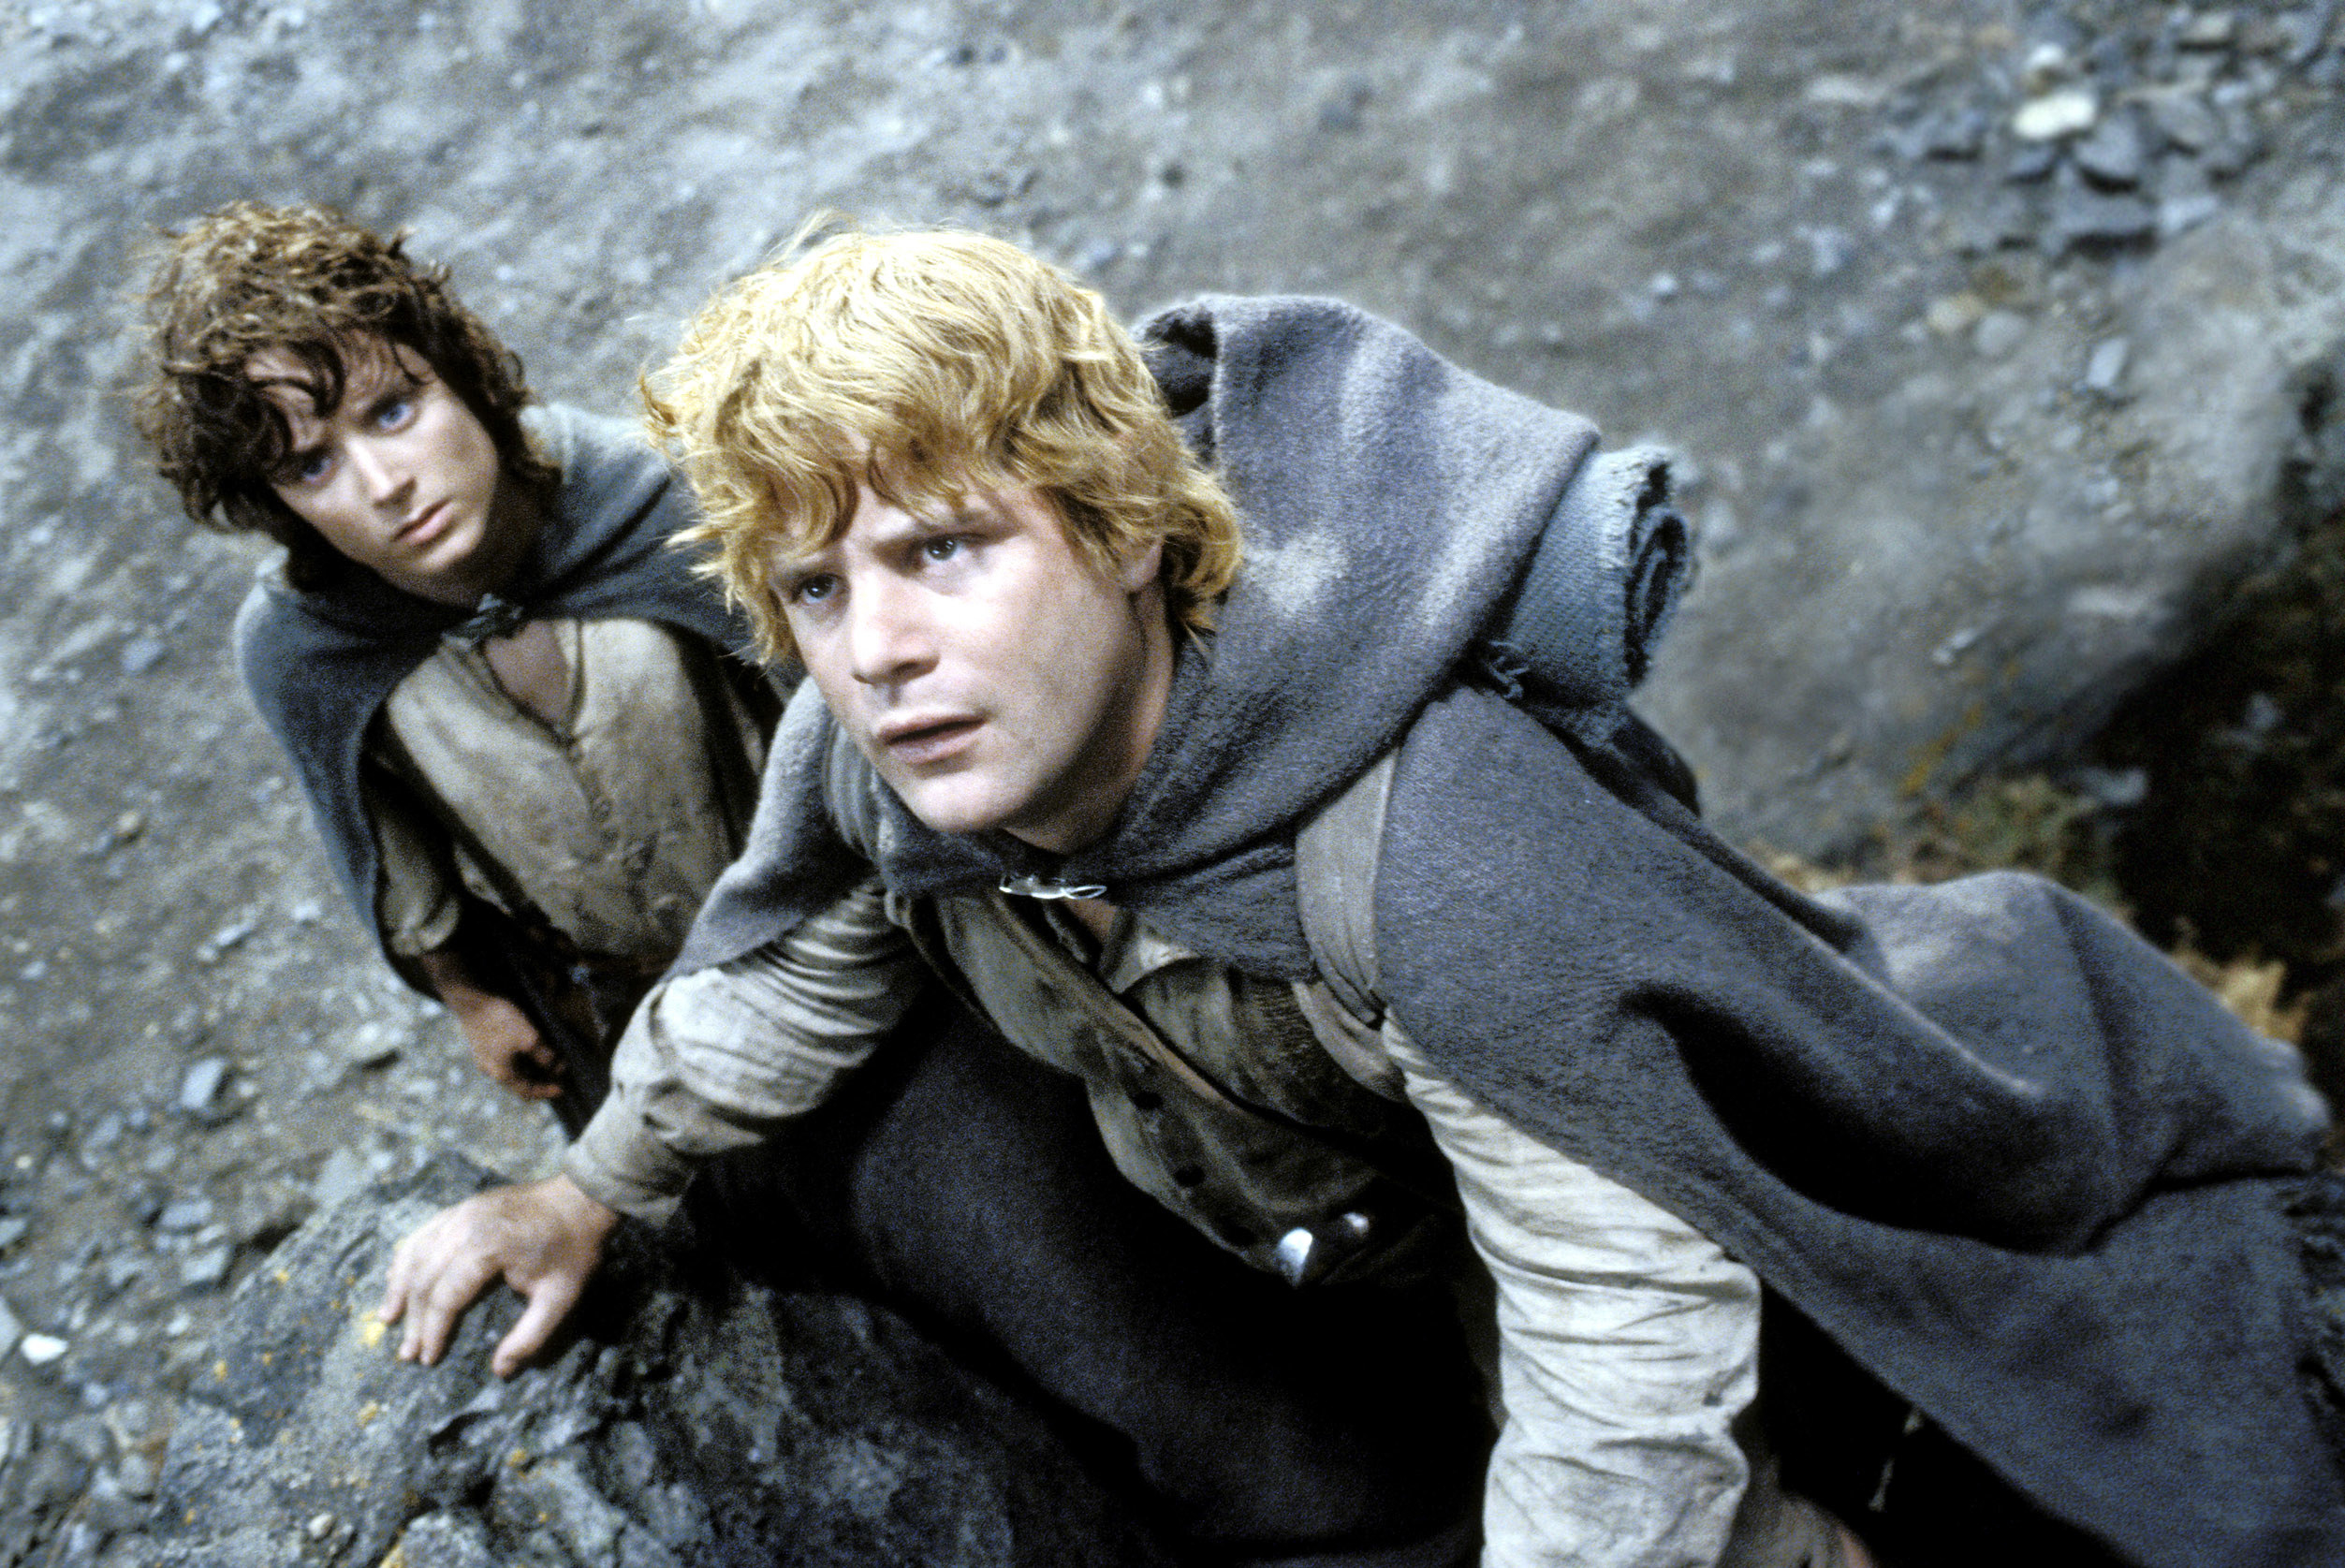 Sam and Frodo climbing